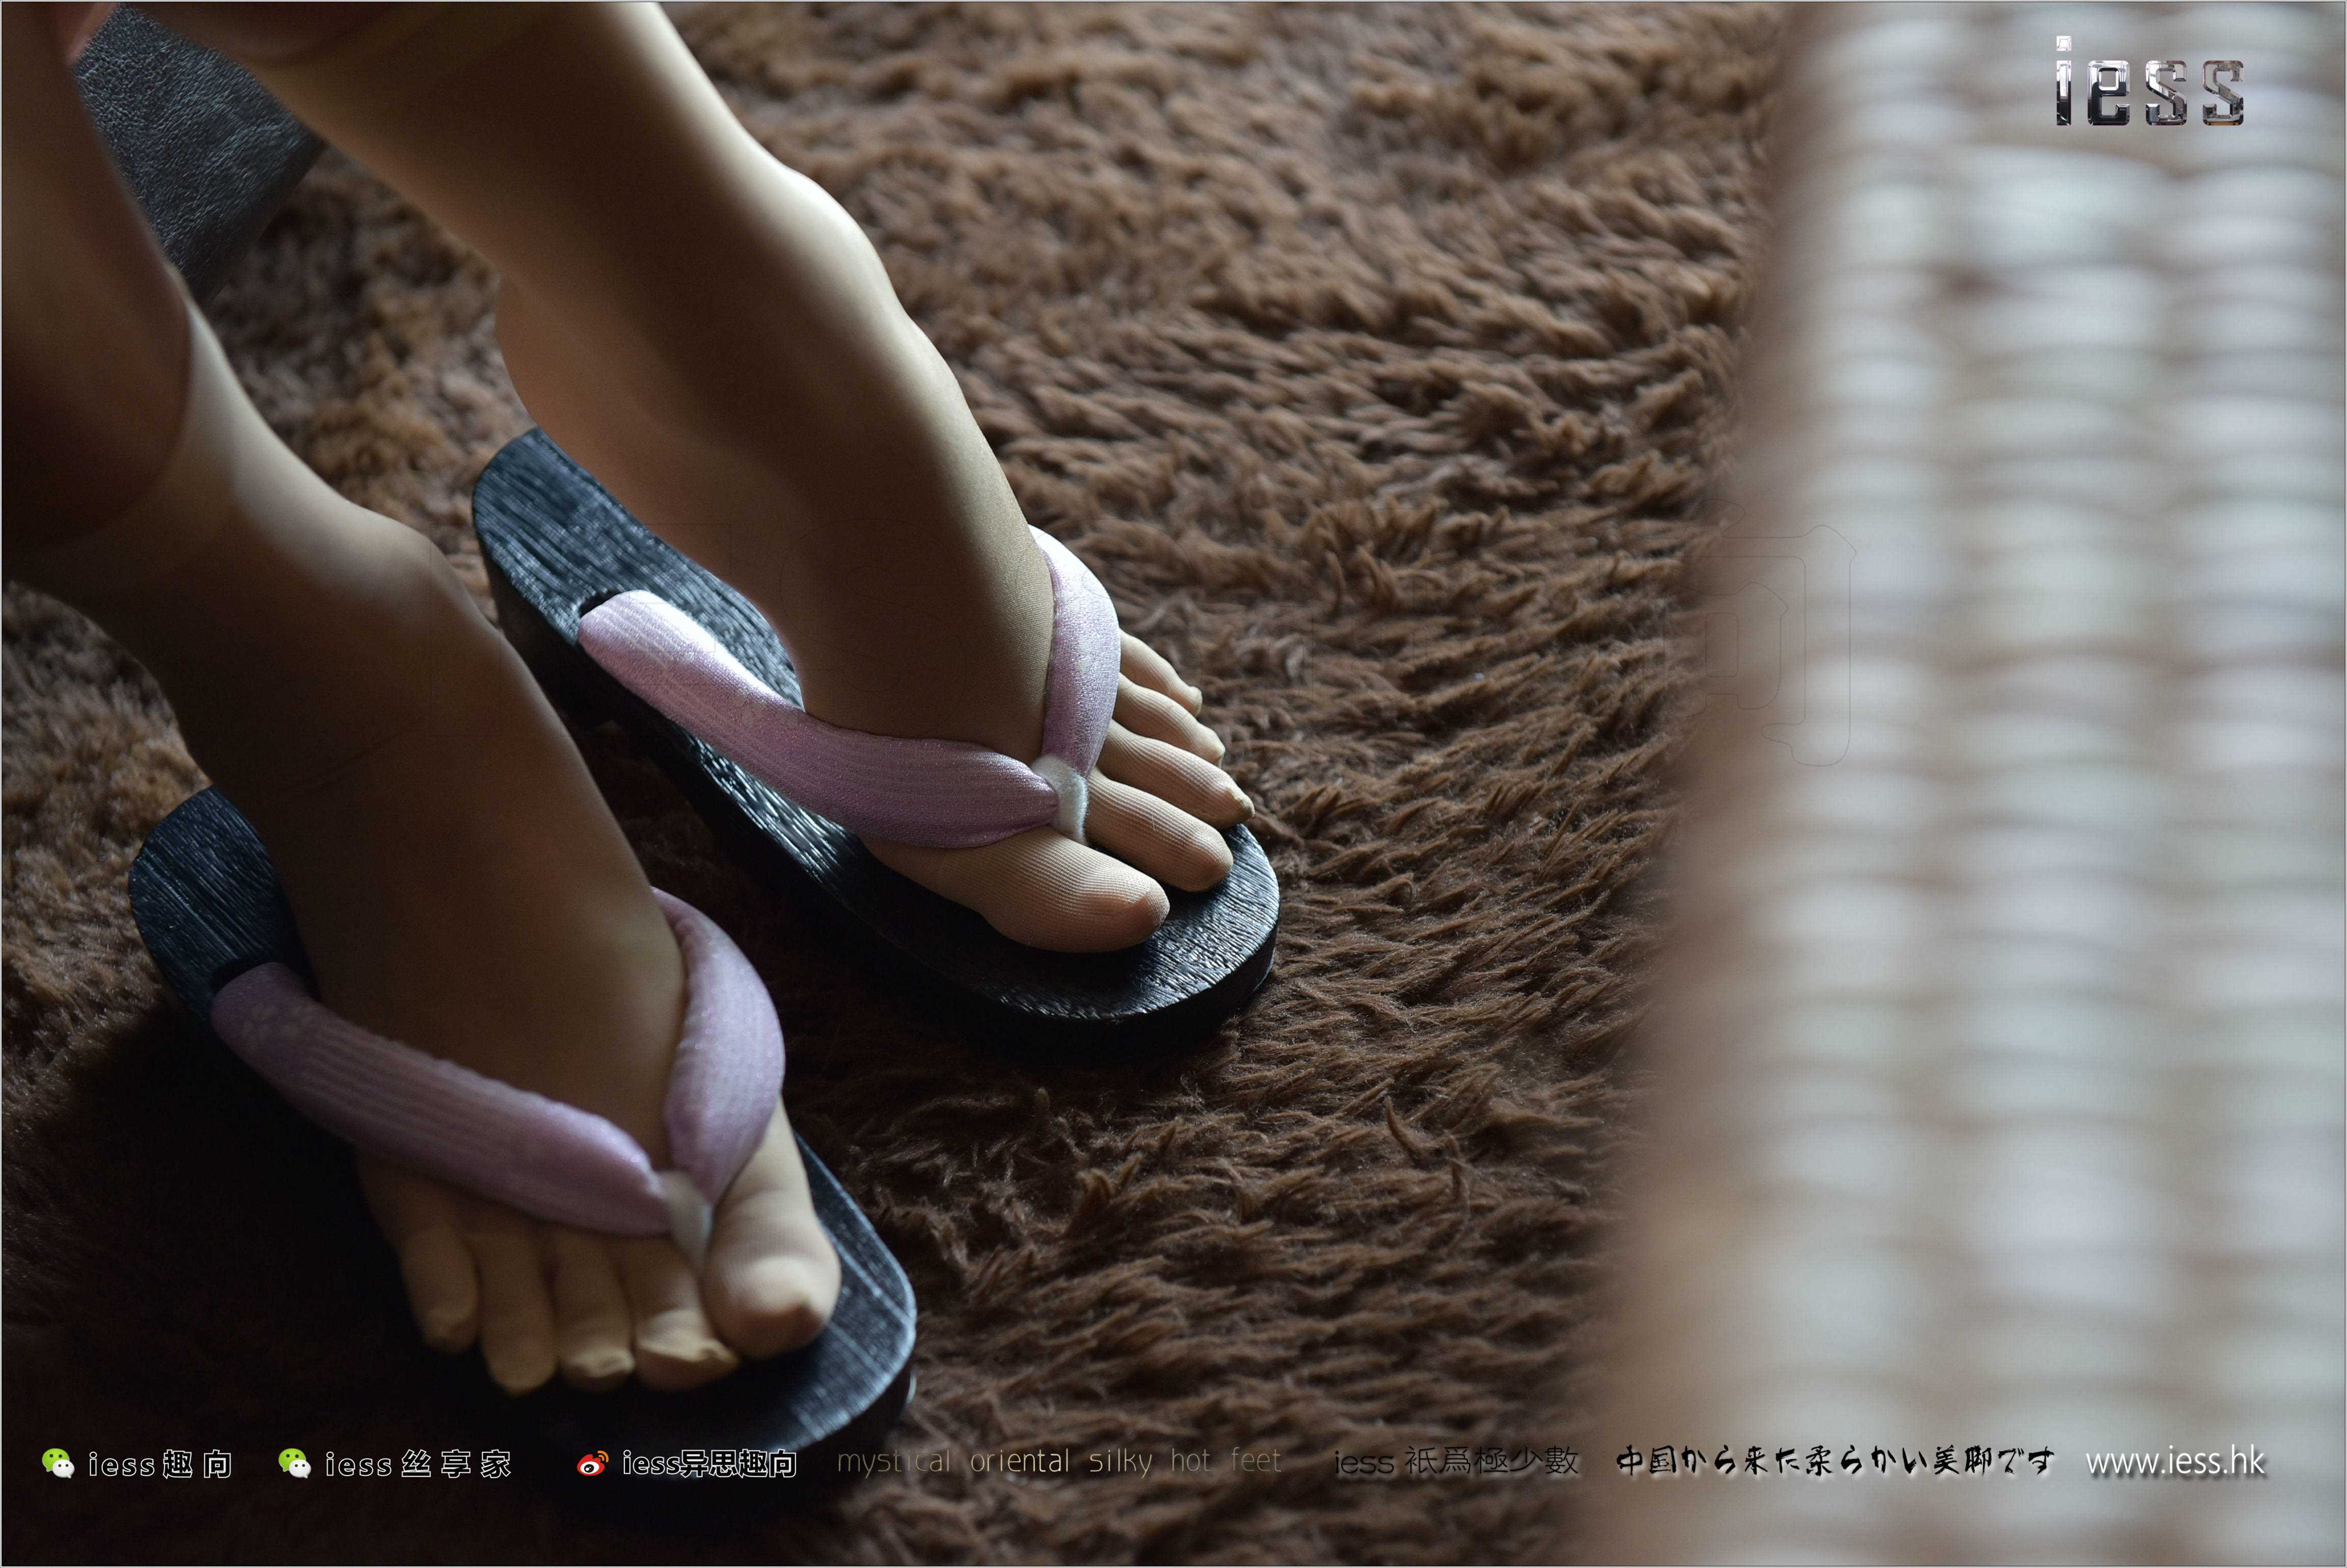 China Beauty Legs and feet 245